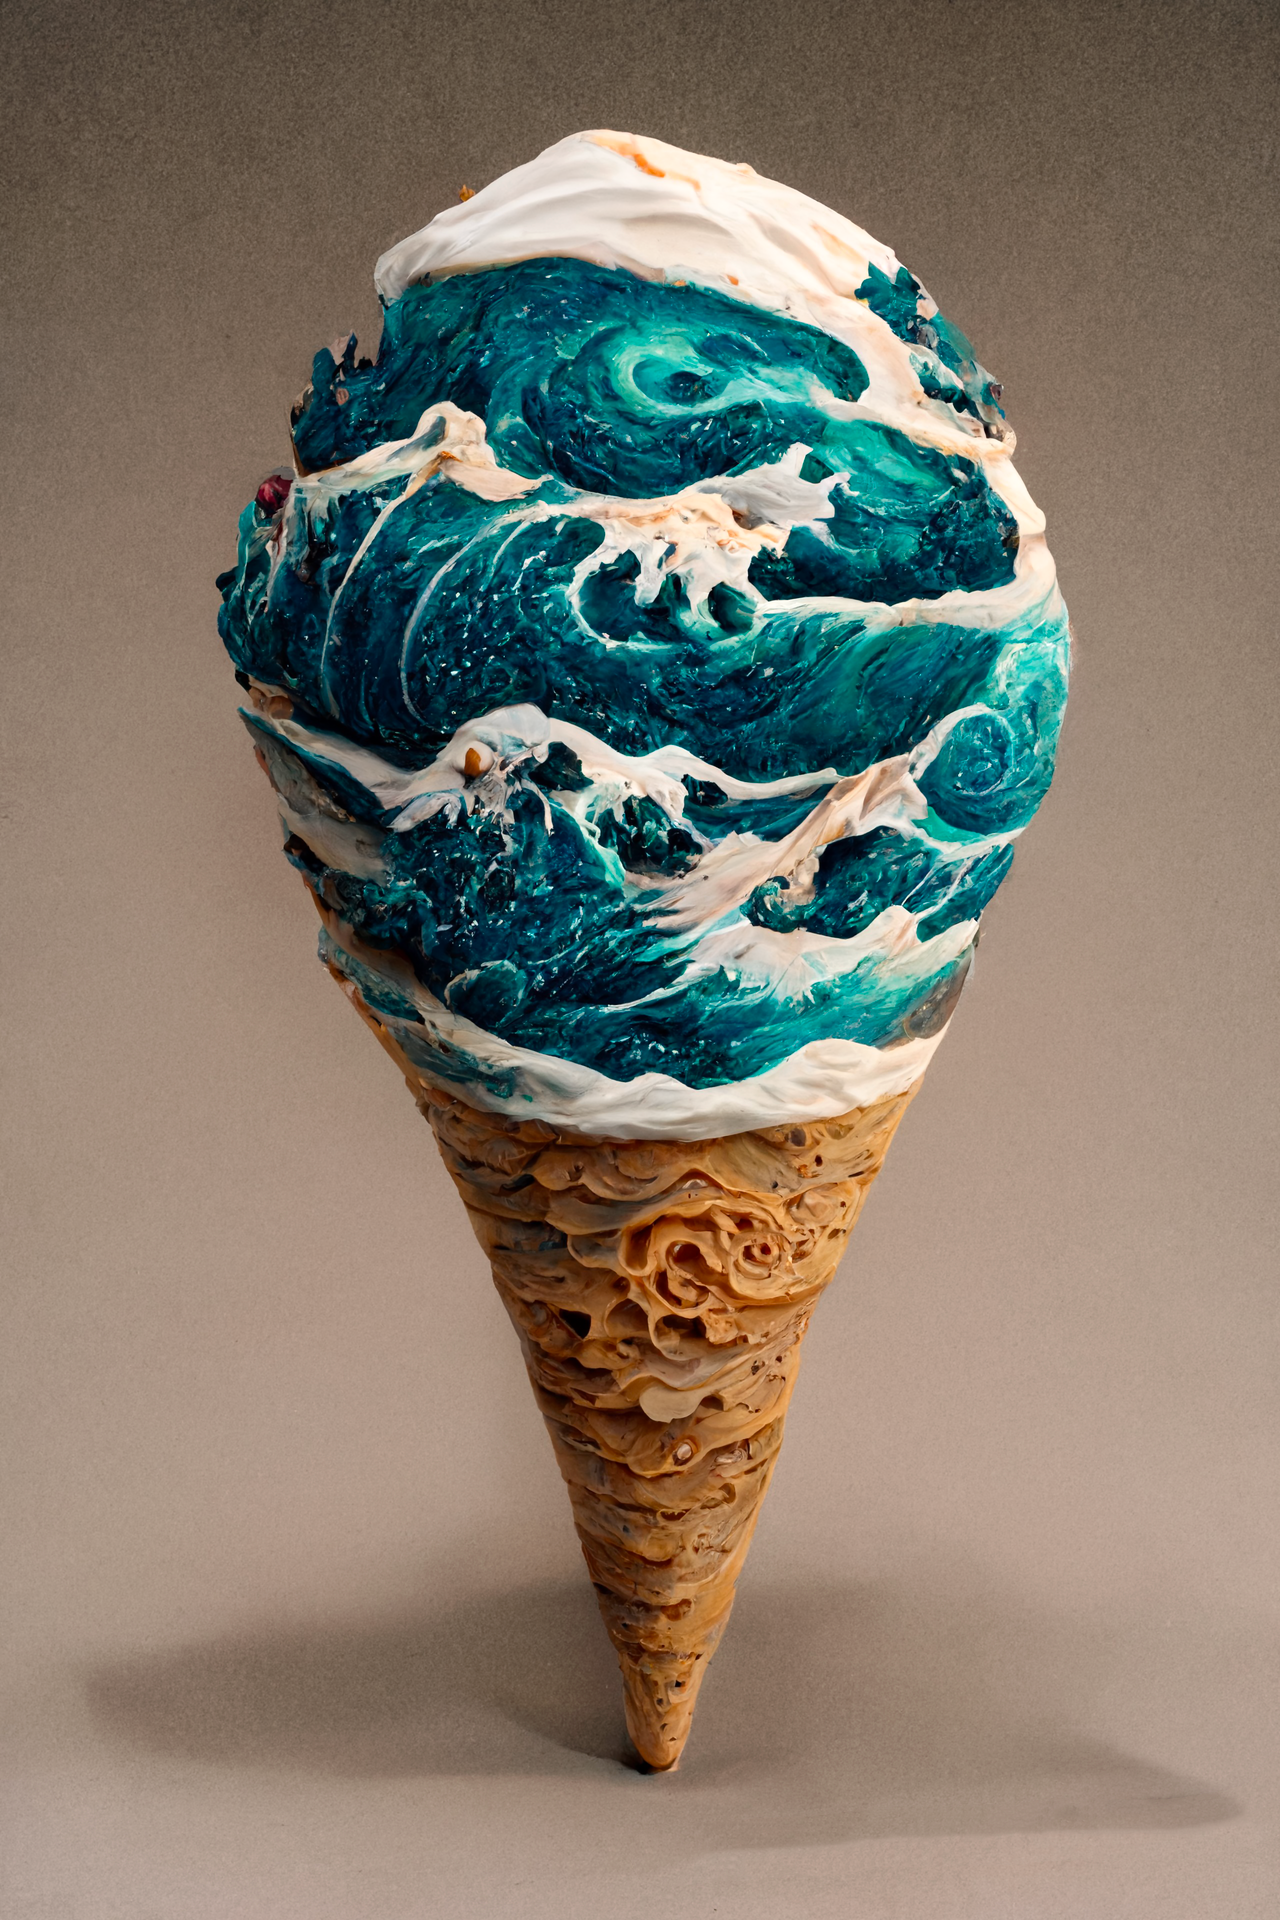 Ice cream cone off Kanagawa